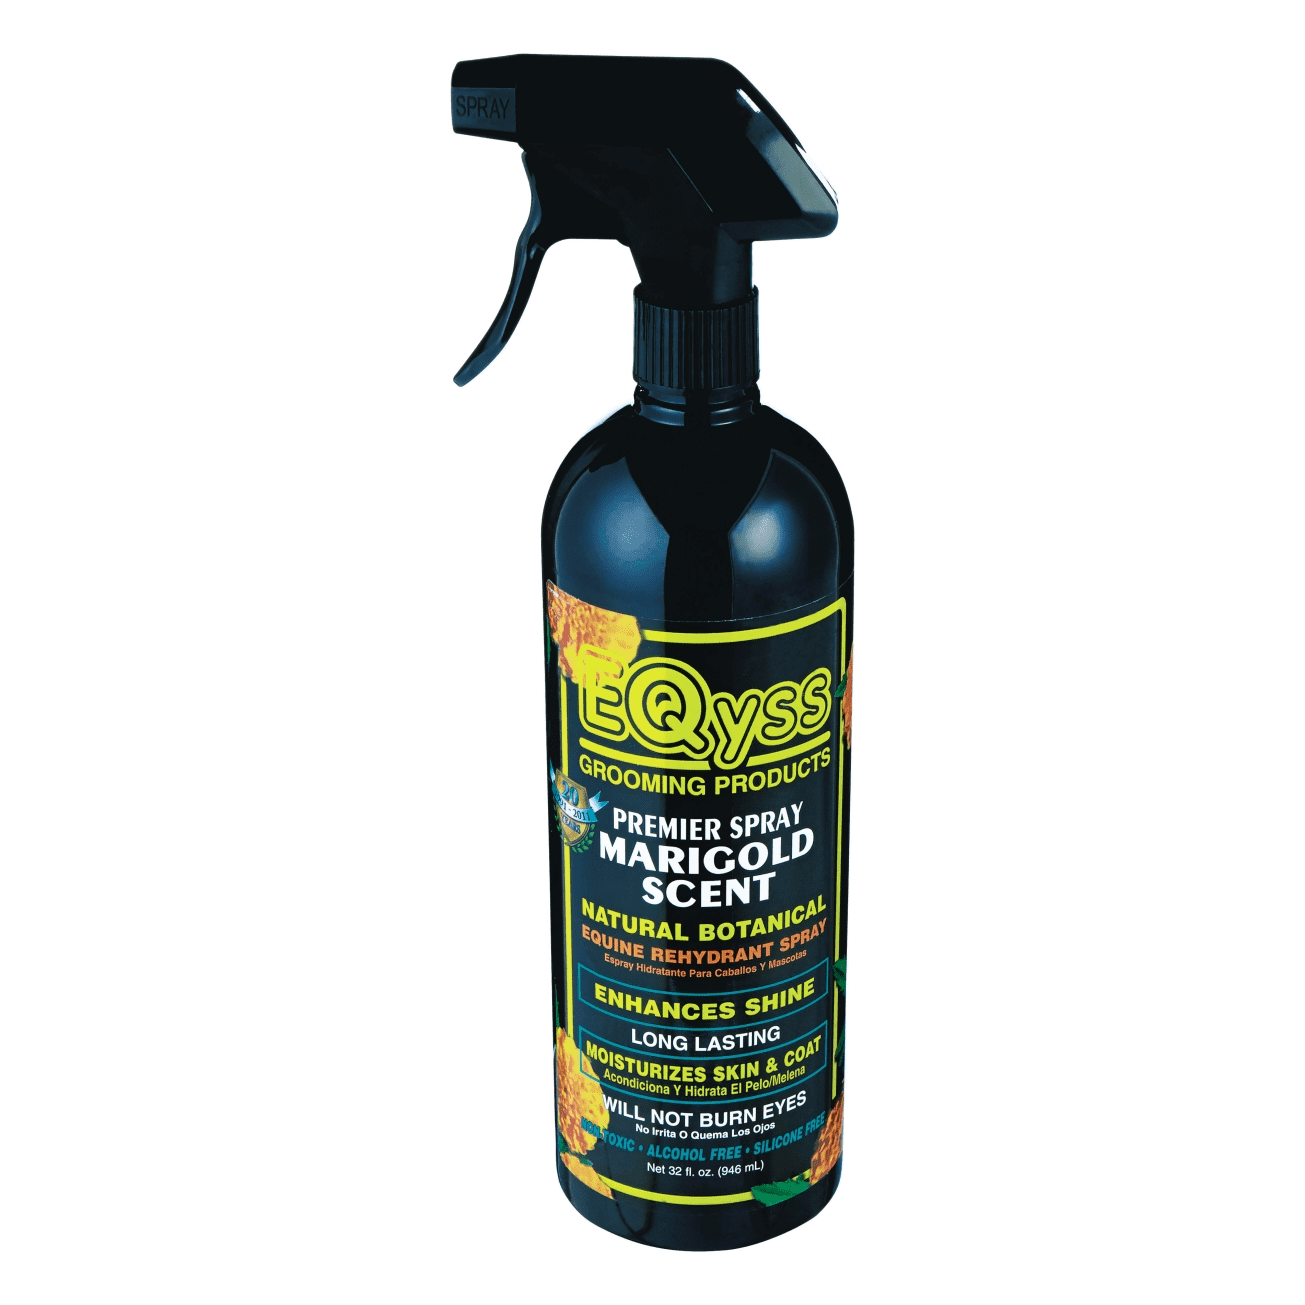 Premier Natural Botanical Equine Rehydrant Spray